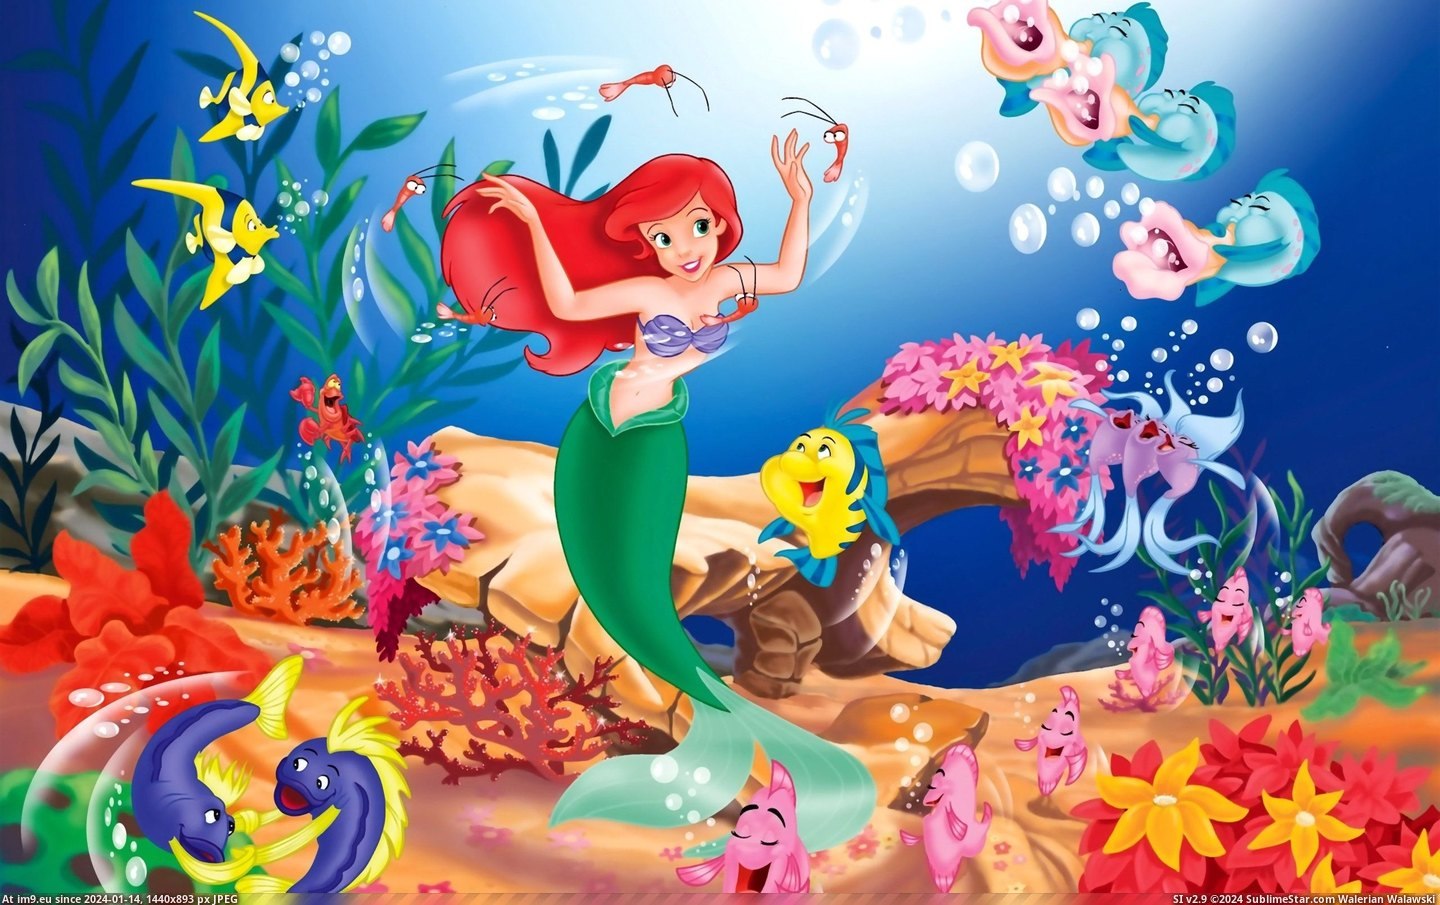 #Wallpaper #Disney #Mermaid #Wide Disney The Little Mermaid Wide HD Wallpaper Pic. (Image of album Unique HD Wallpapers))